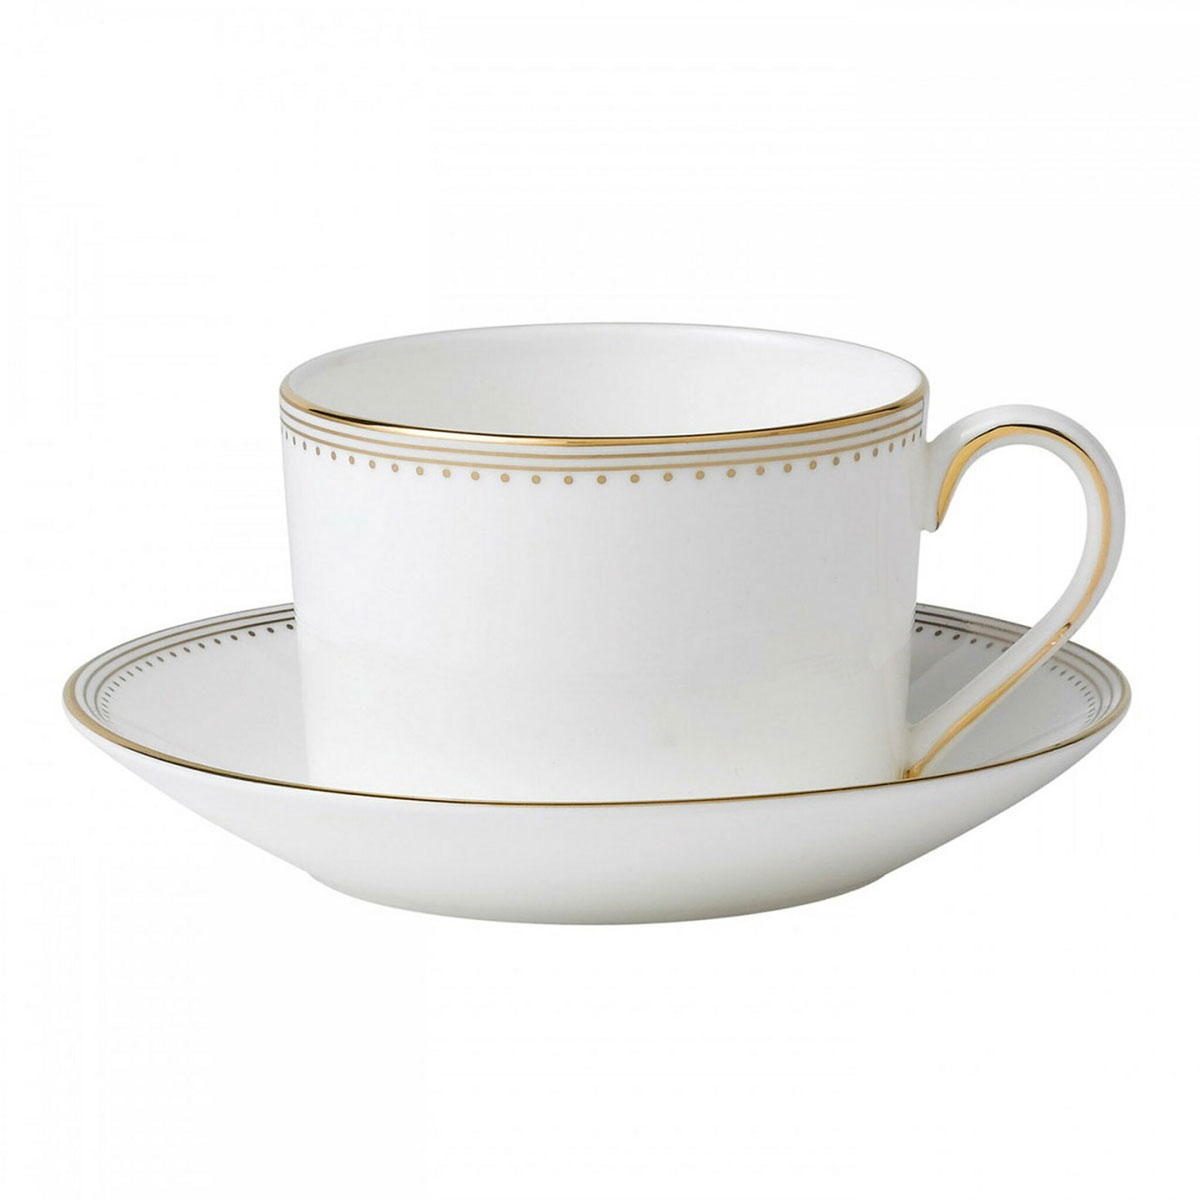 Vera Wang Wedgwood Golden Grosgrain Tea Cup and Saucer